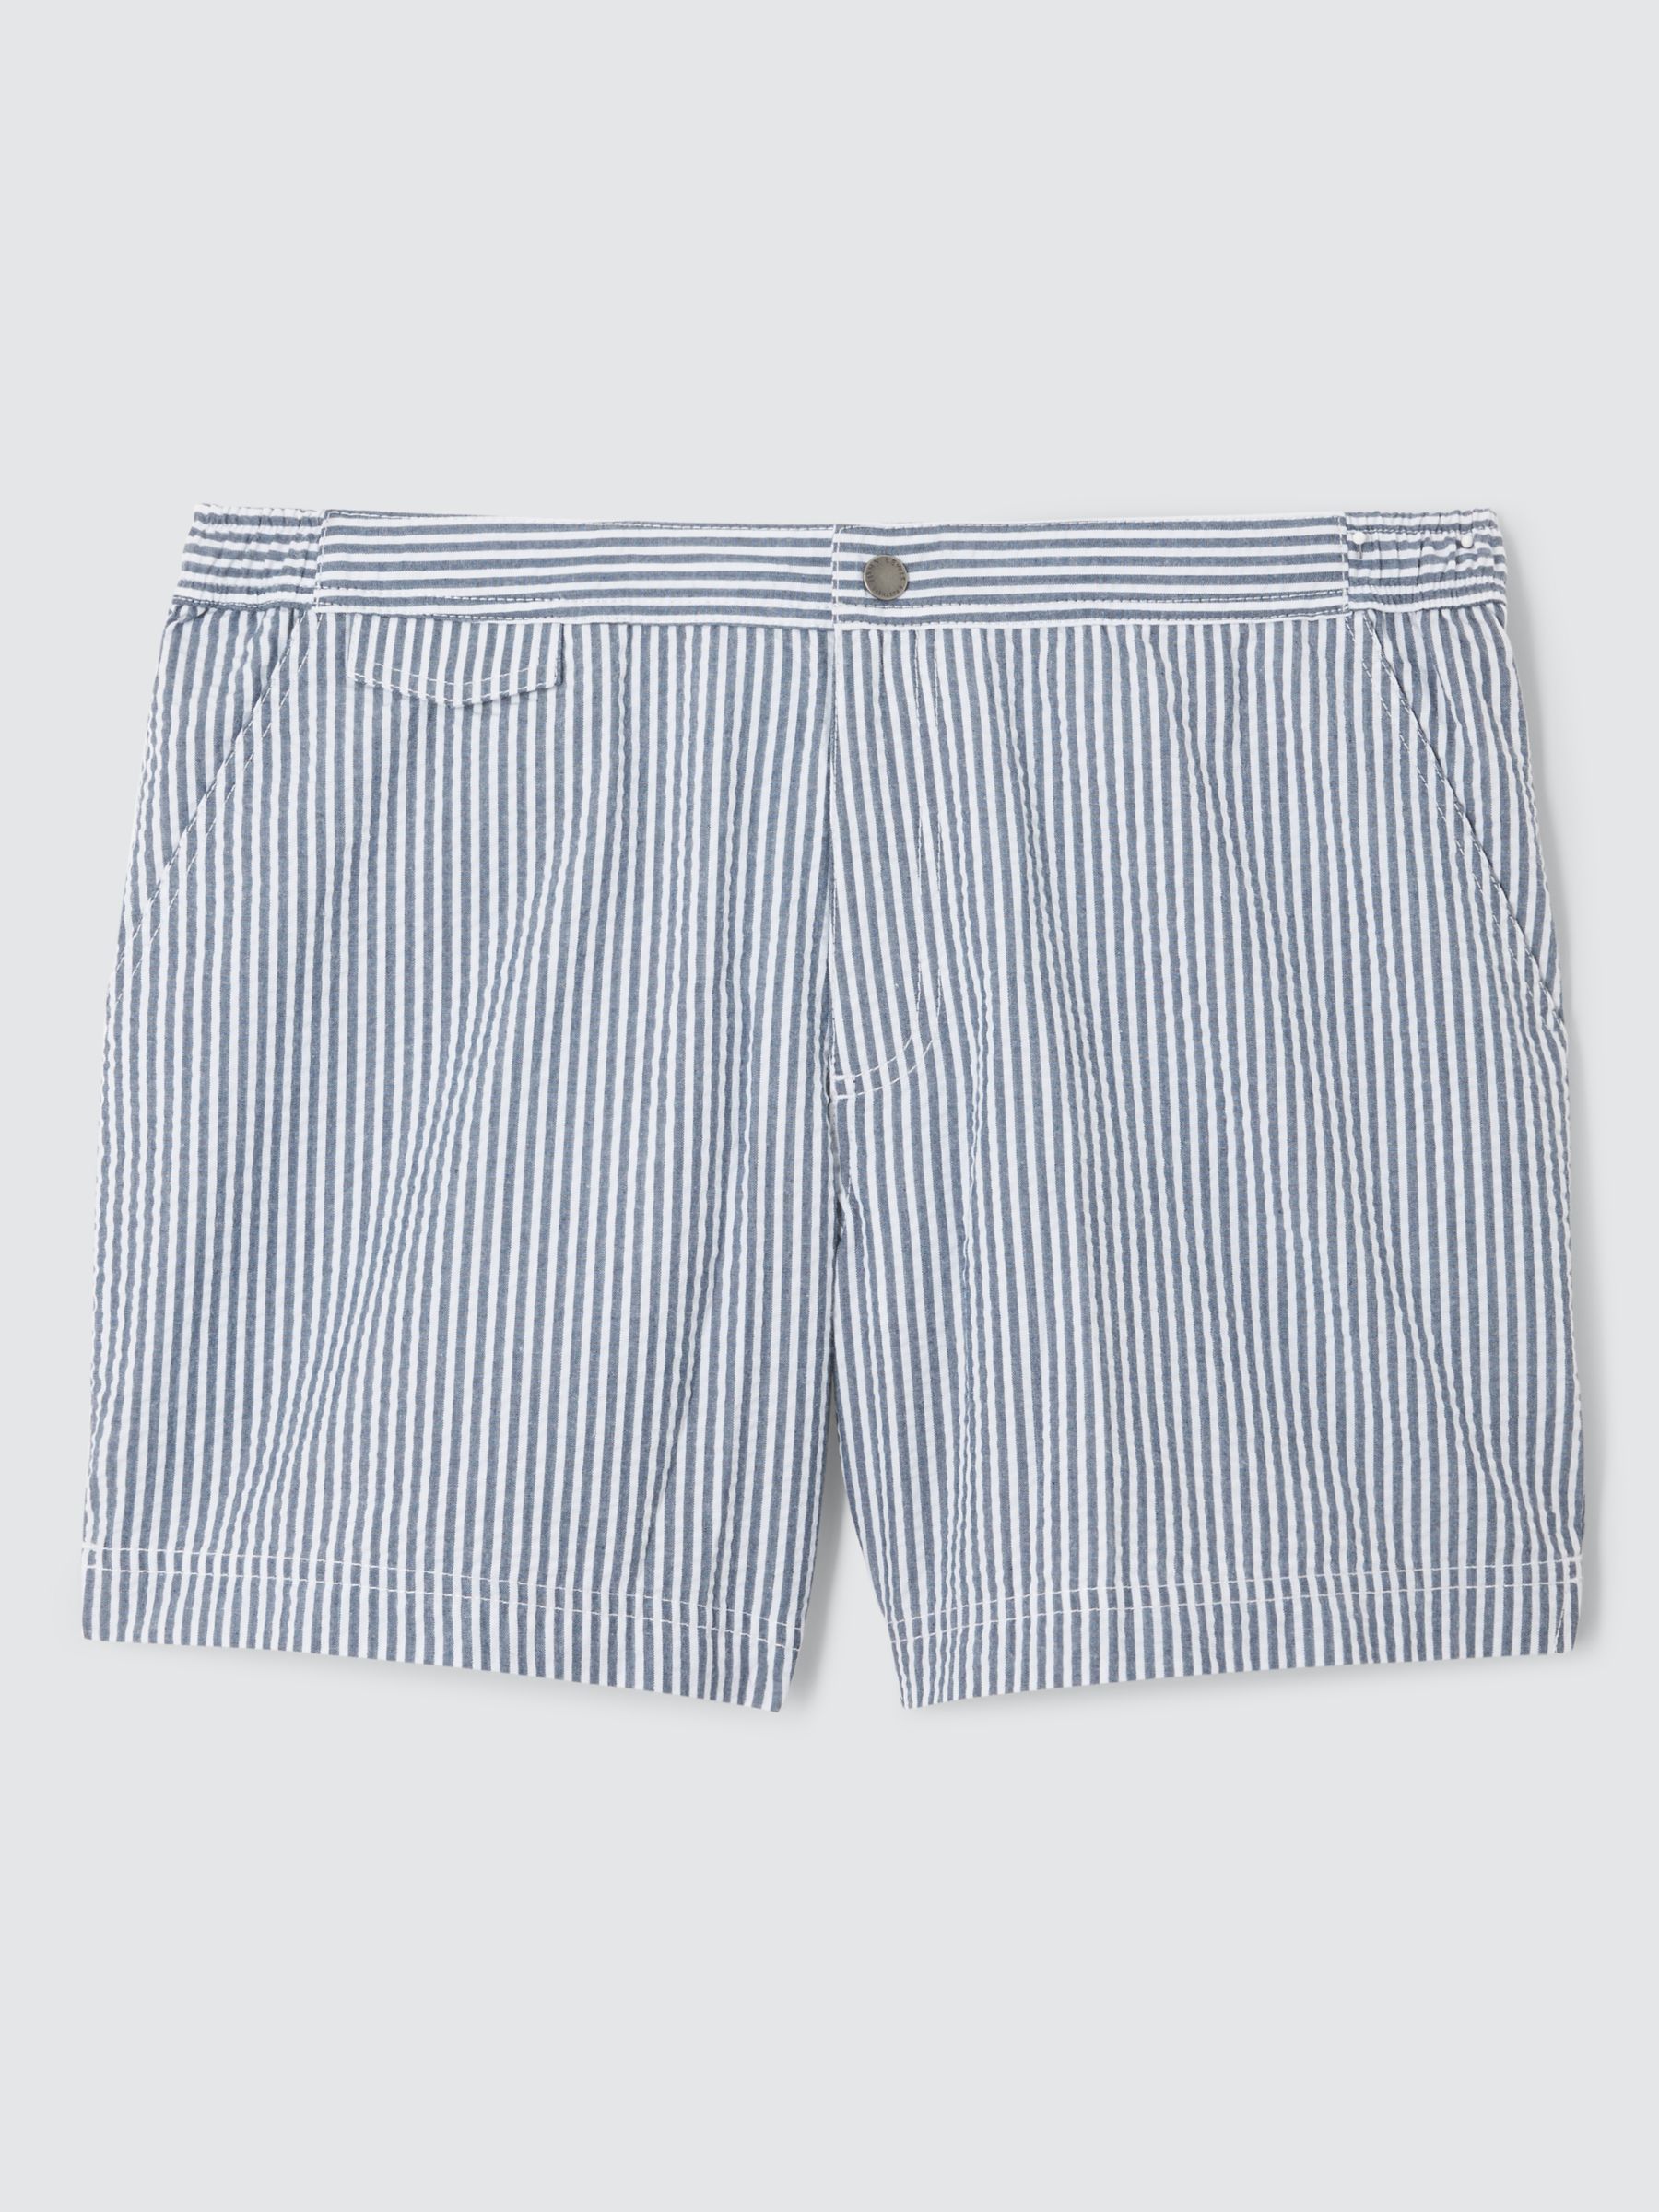 John Lewis Seersucker Stripe Swim Shorts, Blue/White, M